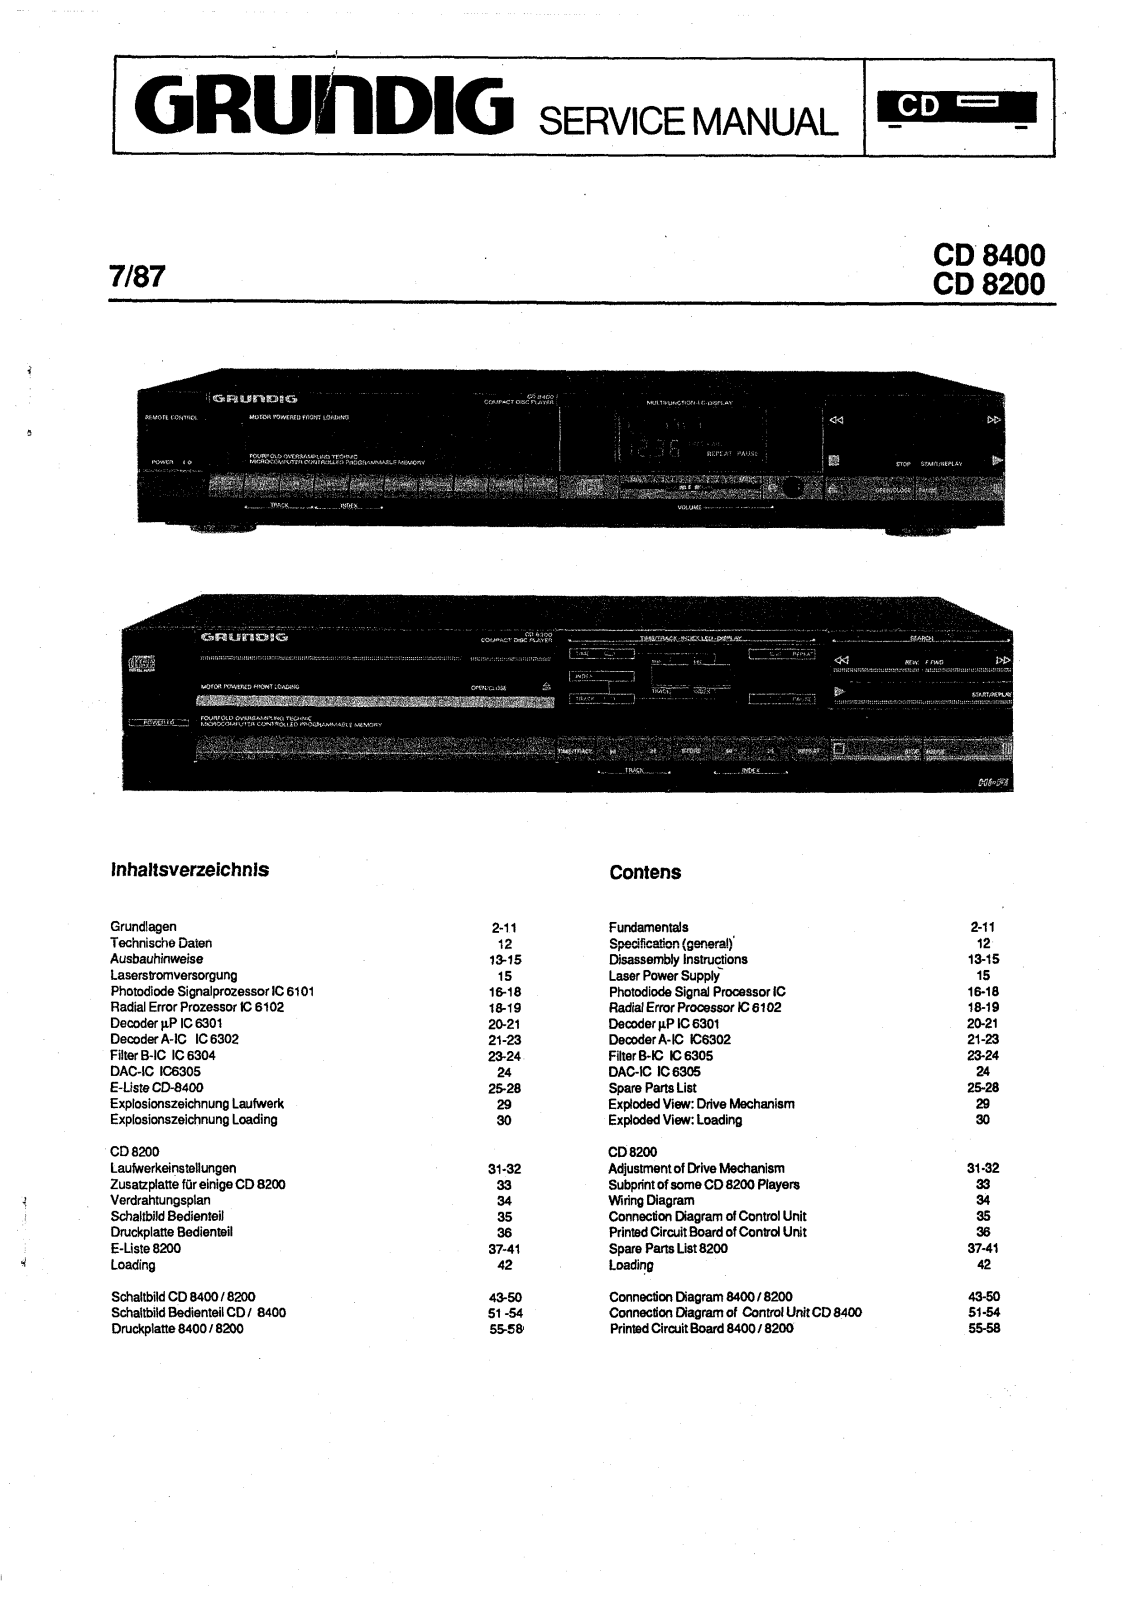 Grundig CD-8200 Service Manual